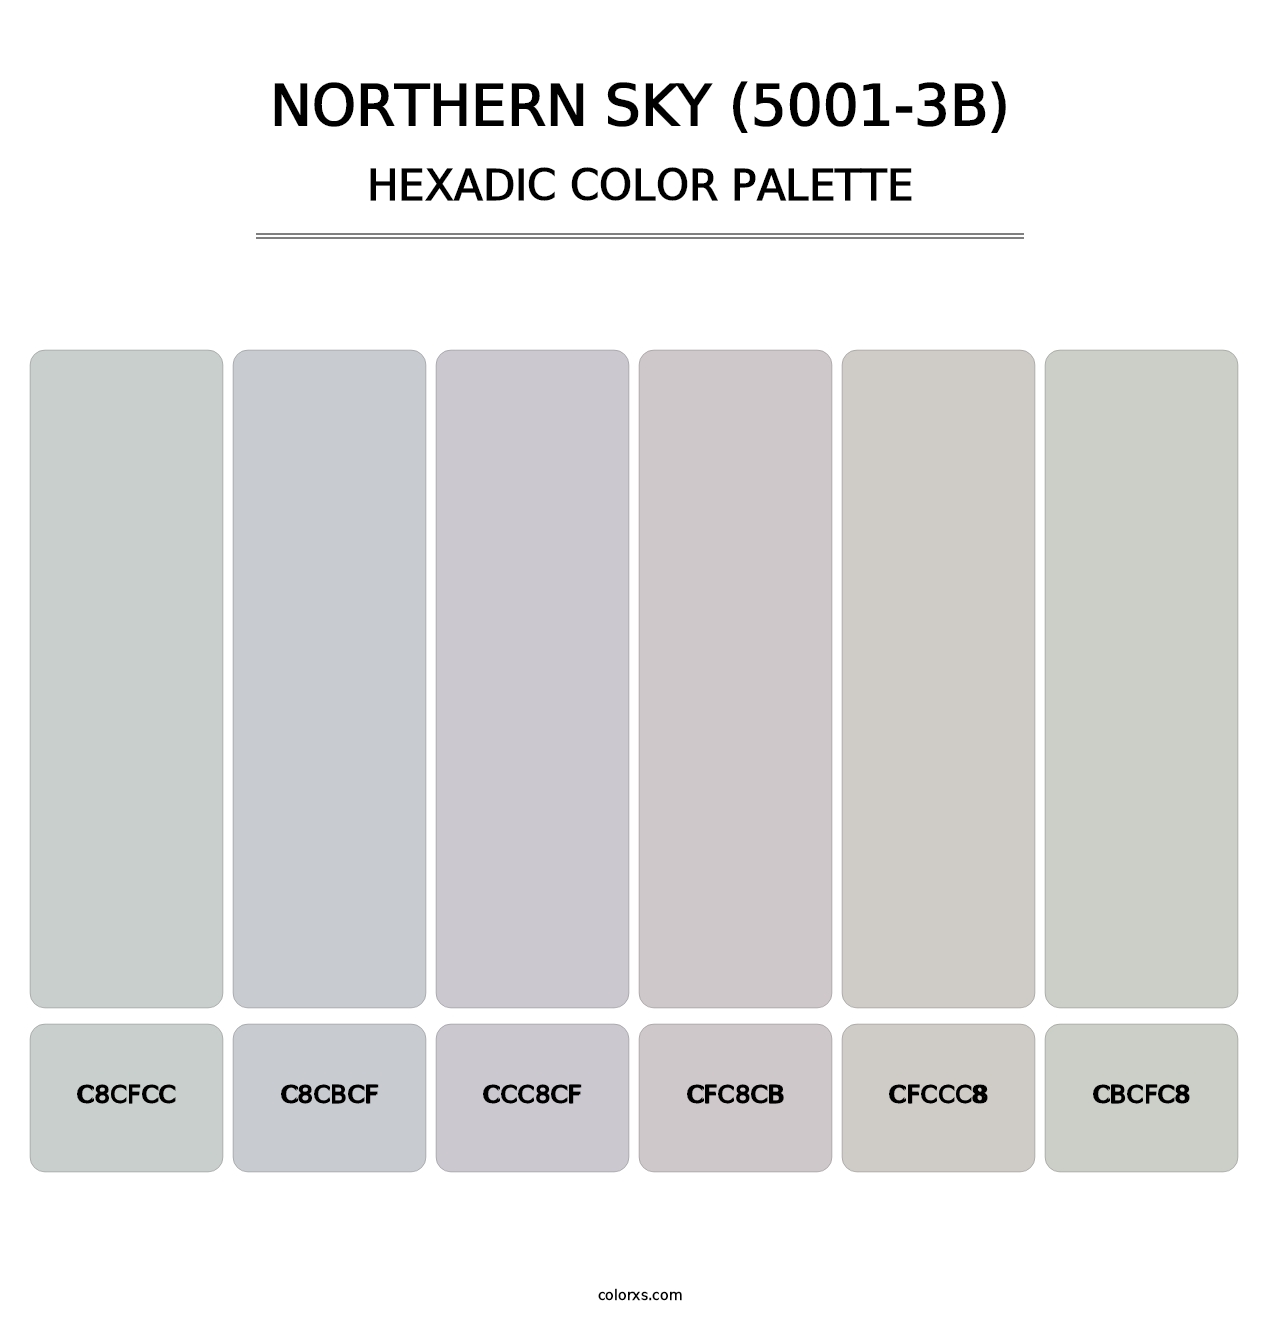 Northern Sky (5001-3B) - Hexadic Color Palette